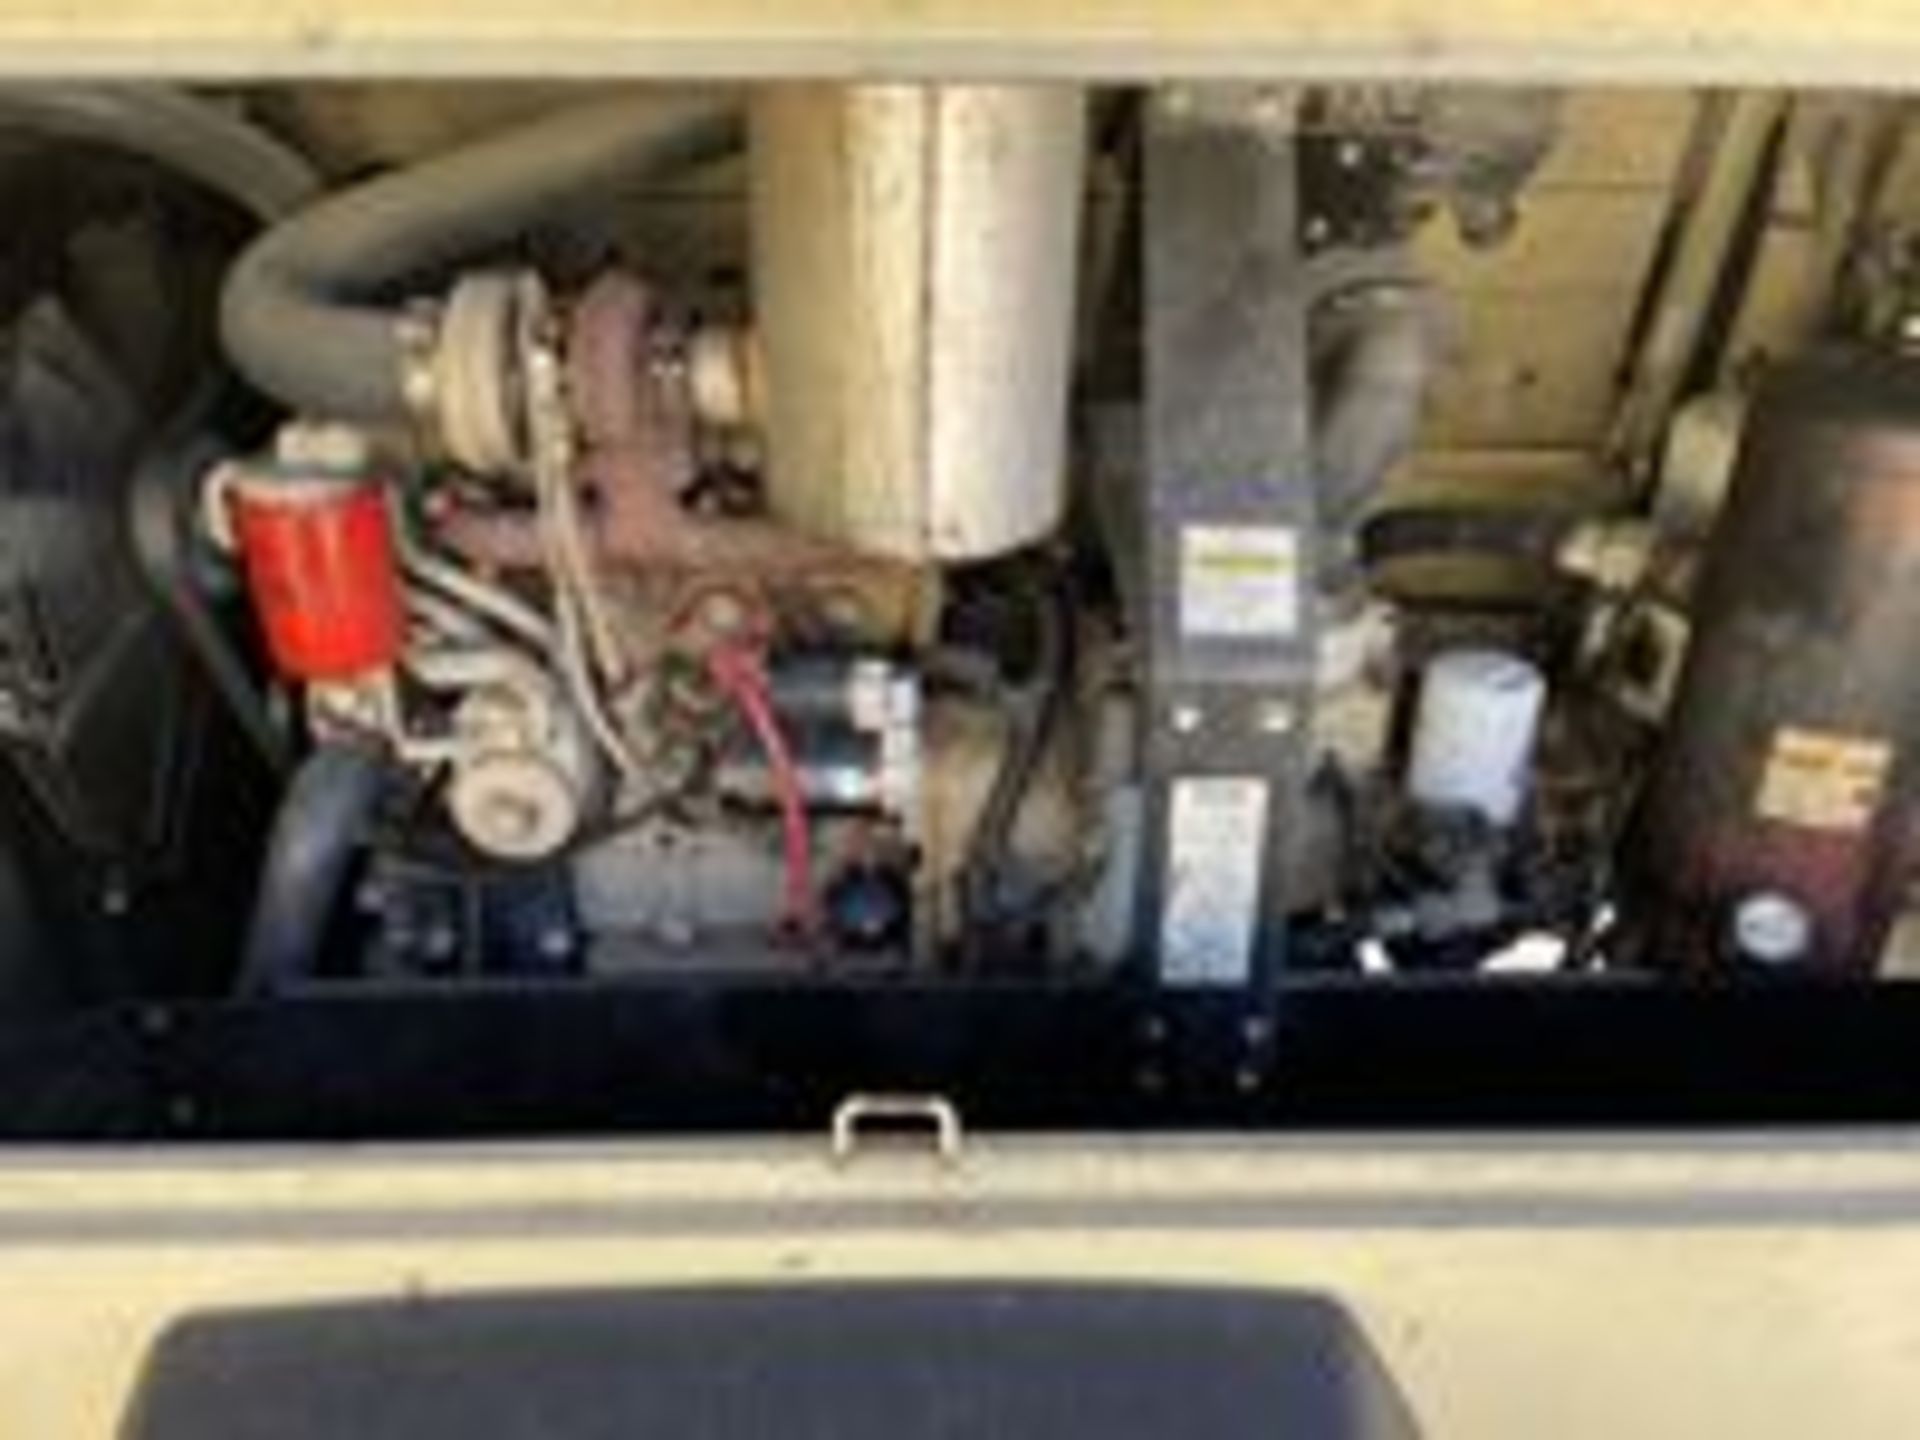 2010 Ingersoll Rand #P185, Towable Air Compressor, Pintle Hitch, John Deere Diesel Motor, (STARTS) - Image 4 of 8